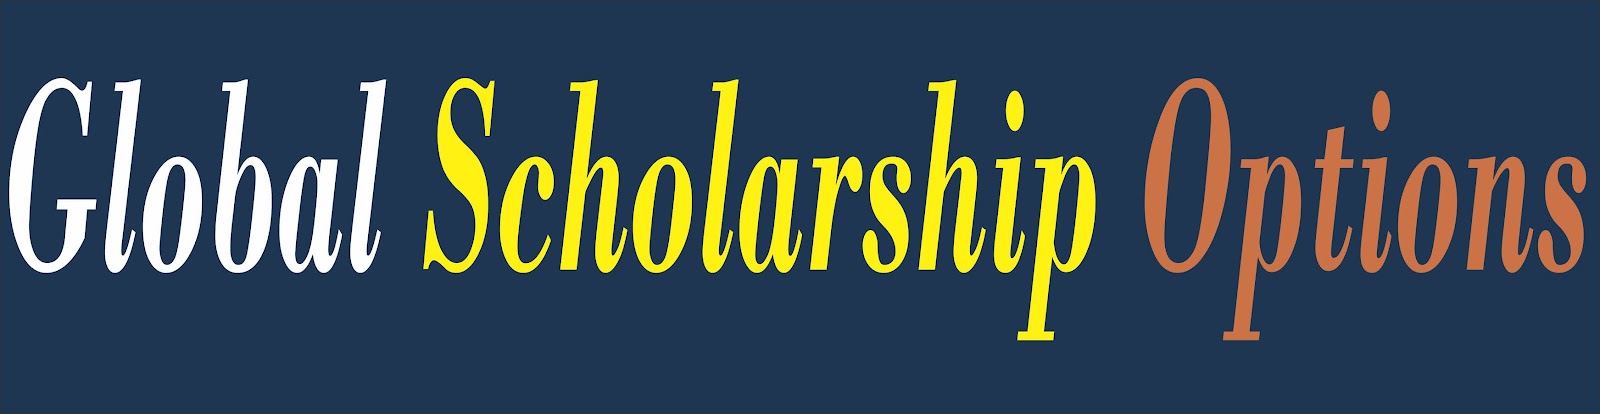 Global Scholarship options